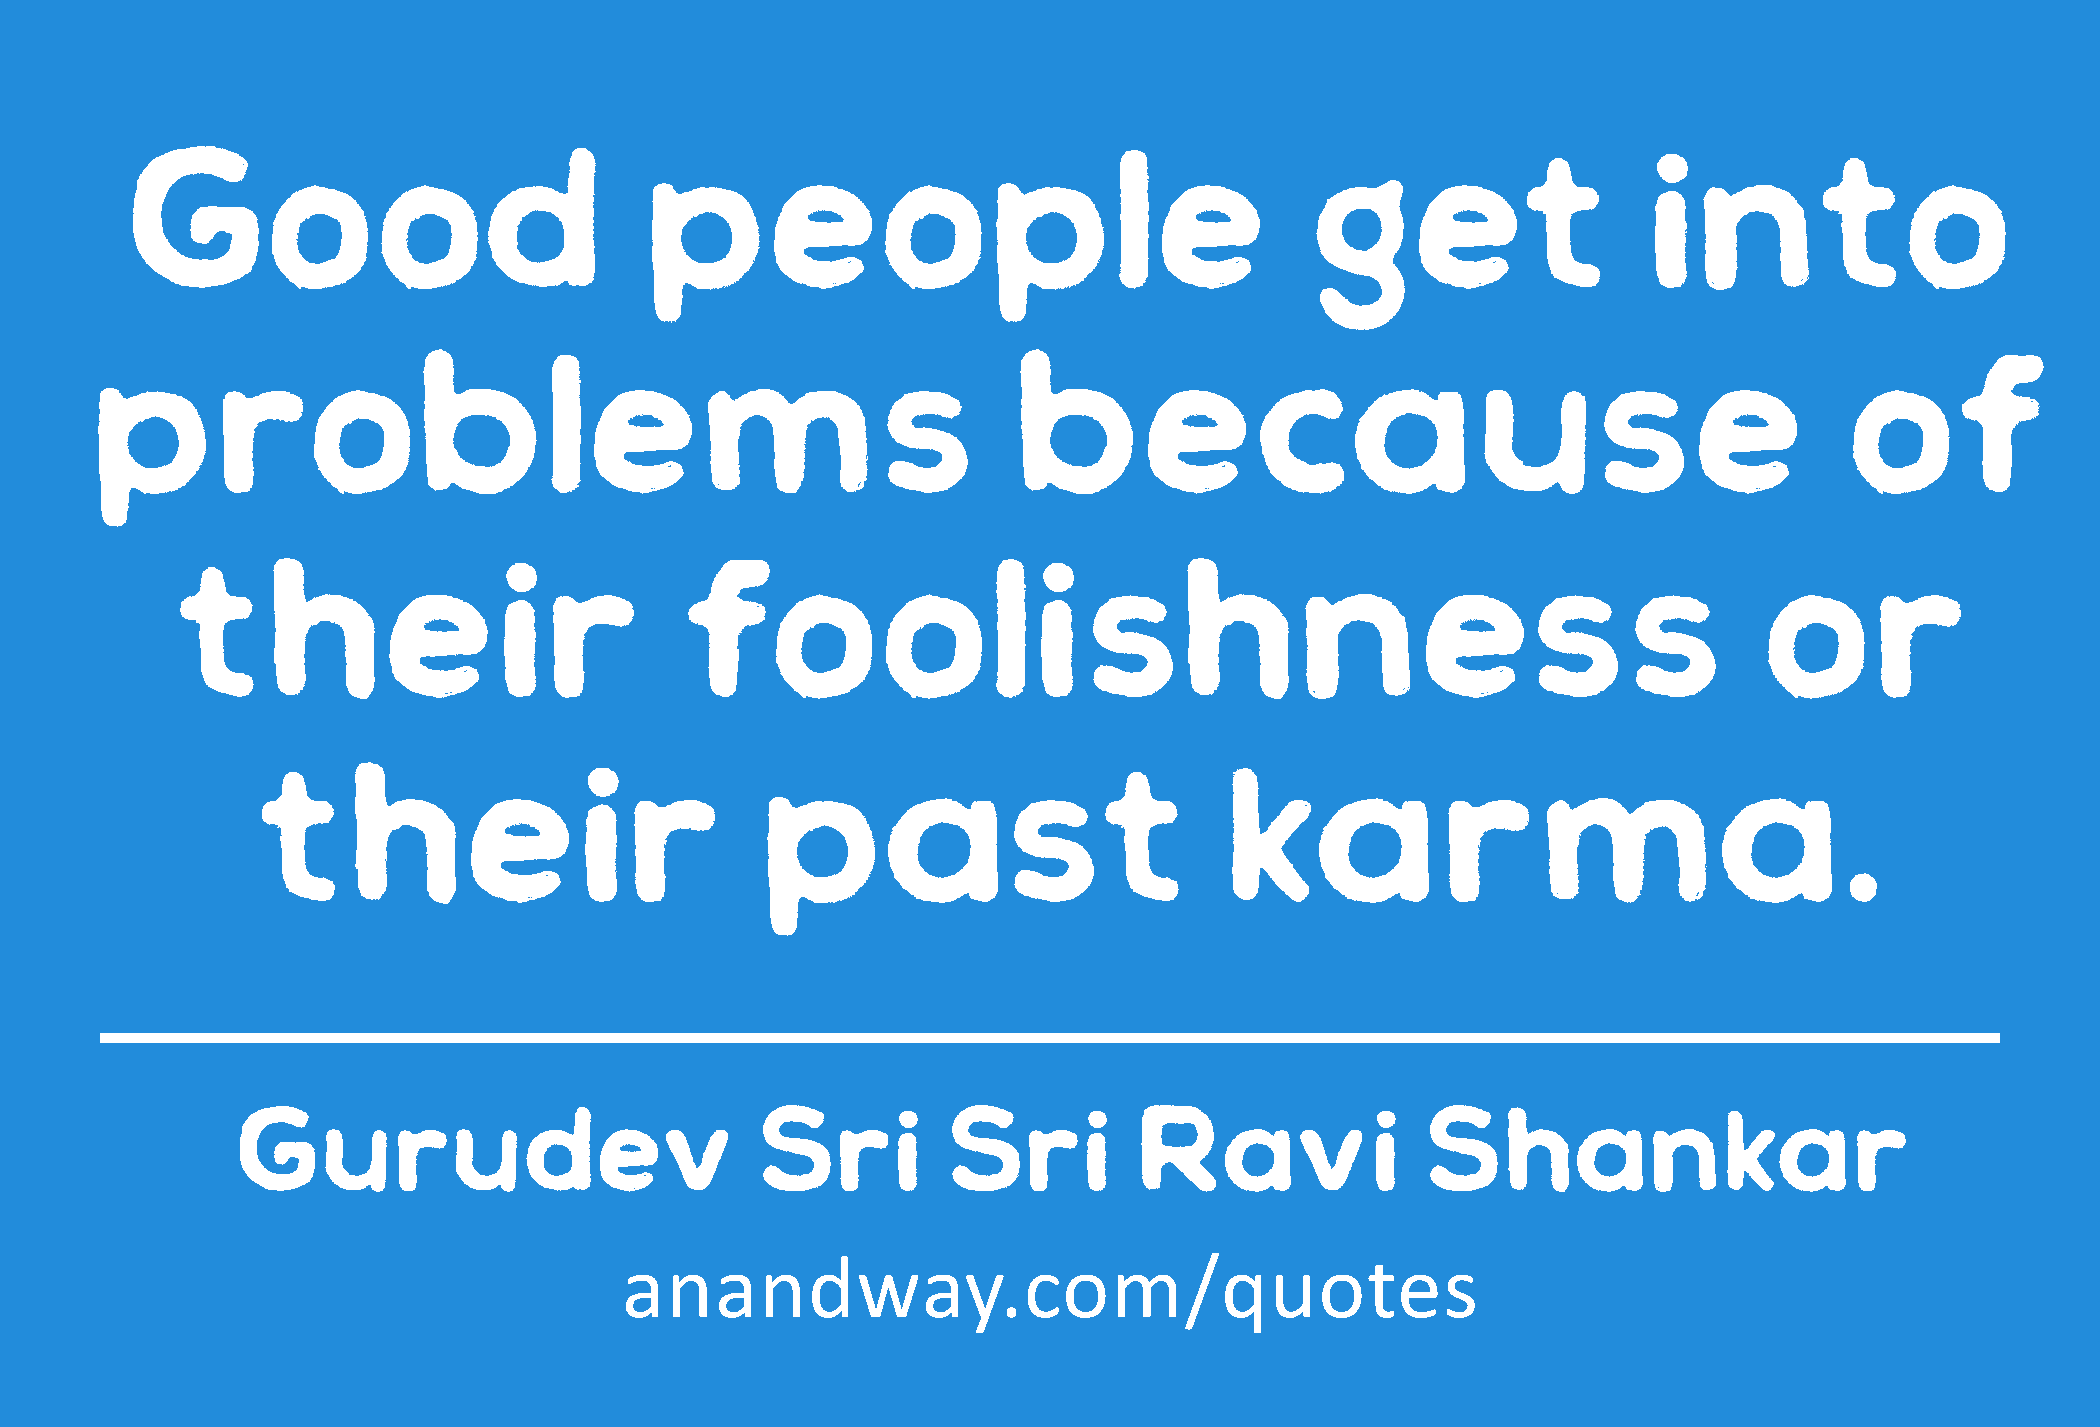 Good people get into problems because of their foolishness or their past karma. 
 -Gurudev Sri Sri Ravi Shankar